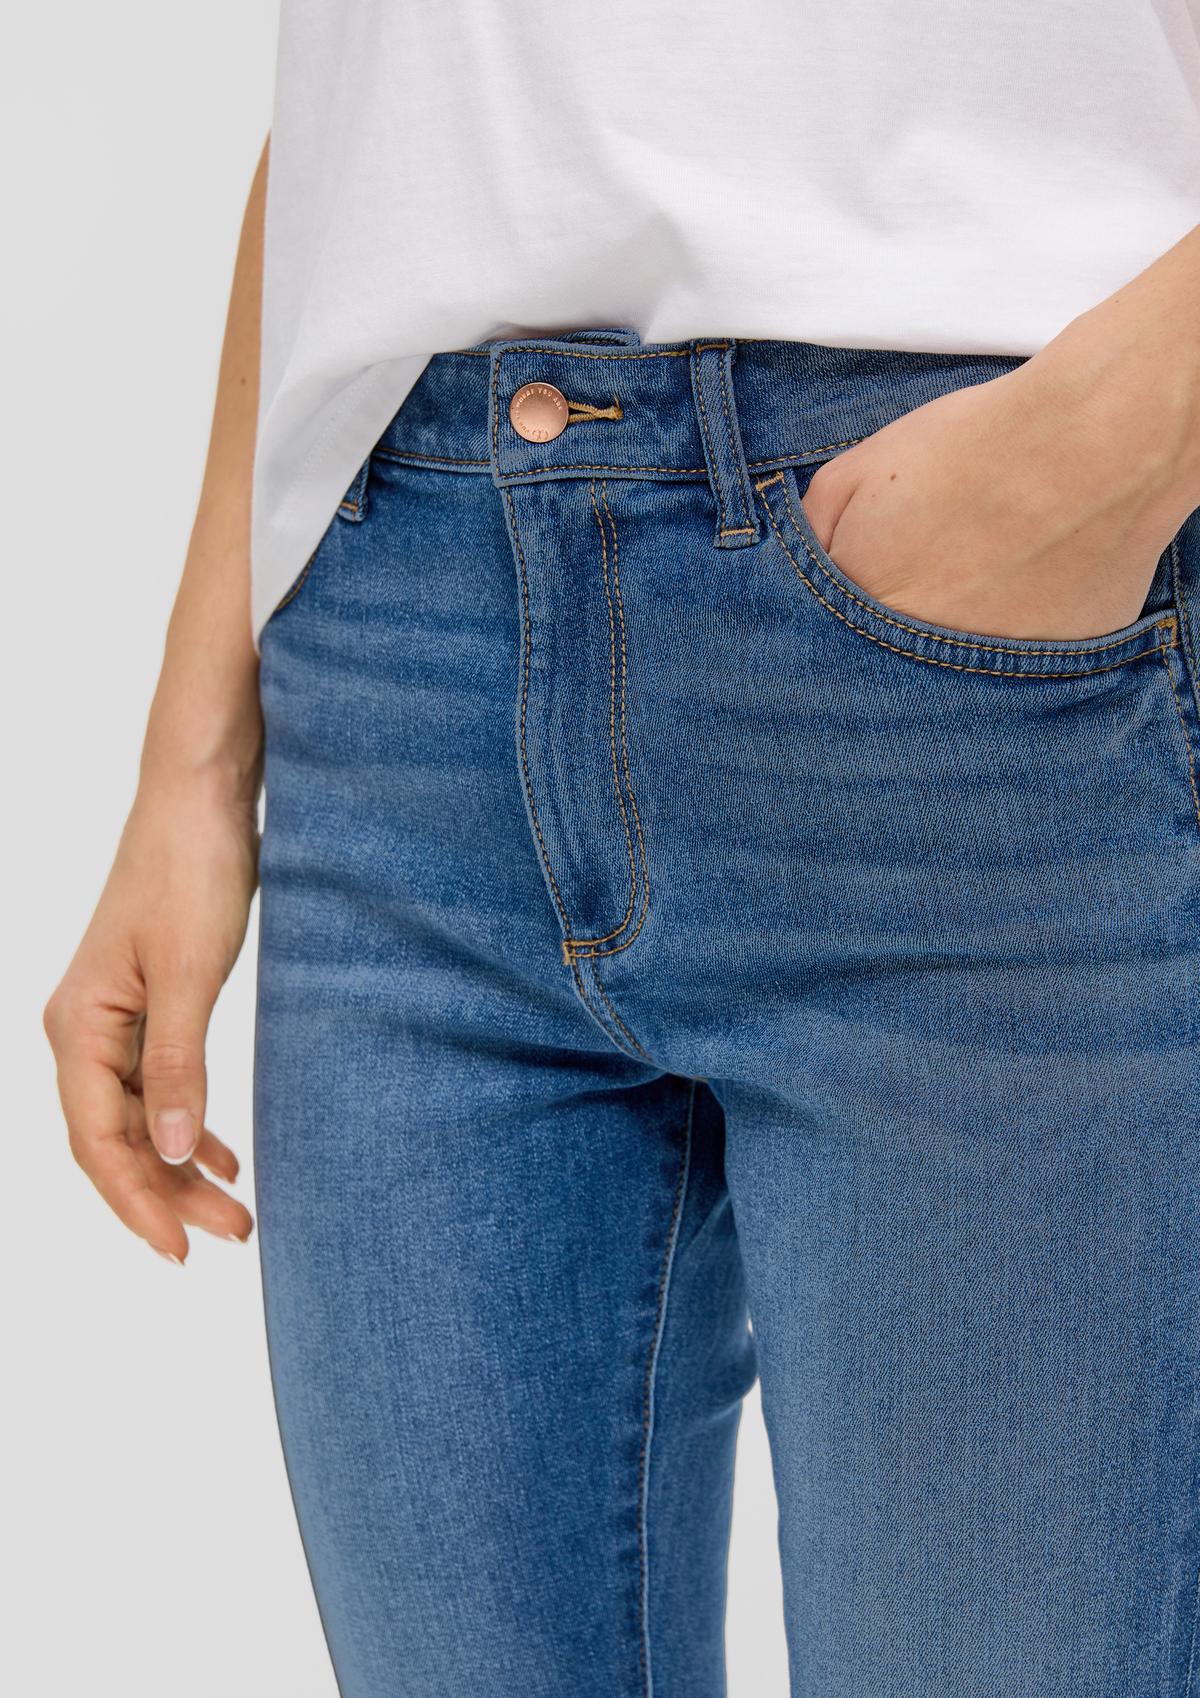 s.Oliver Jeans hlače / izjemno oprijet kroj super Skinny Fit / High Rise / oprijete hlačnice